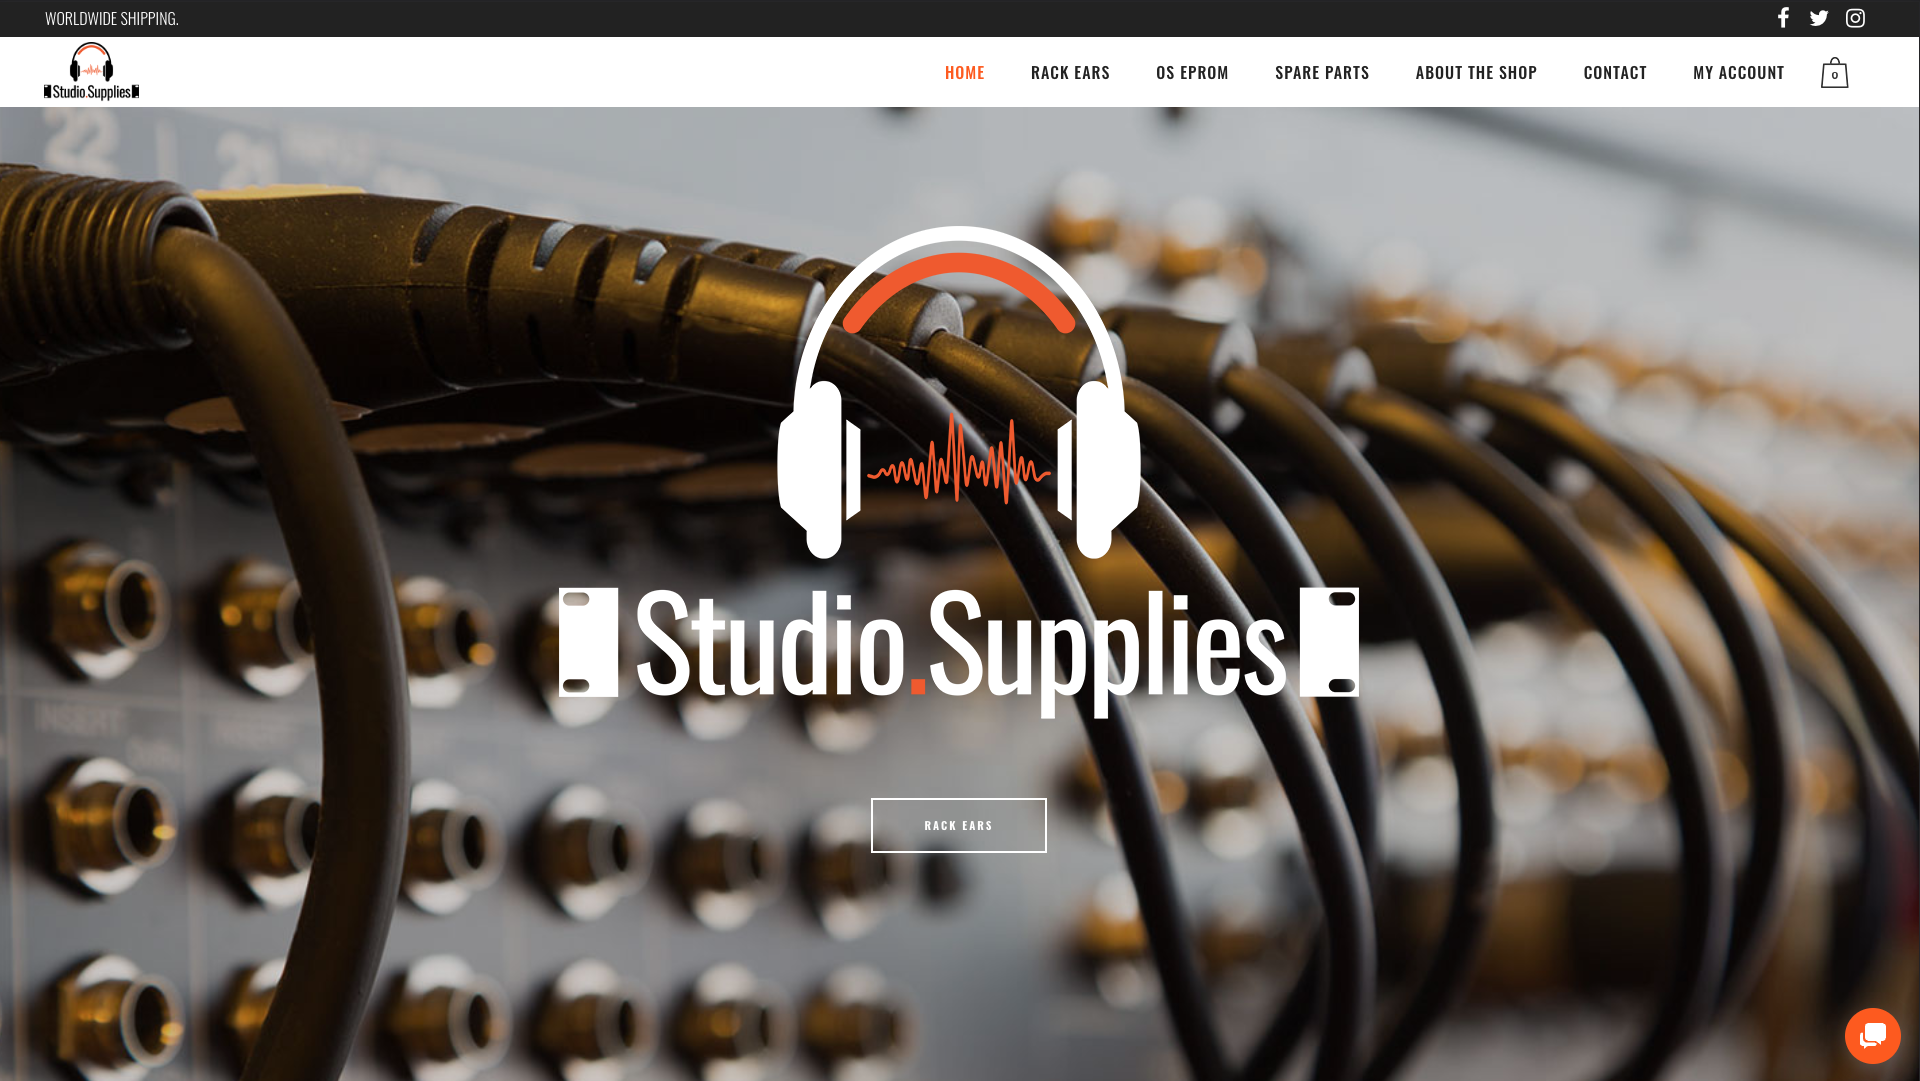 www.studio.supplies